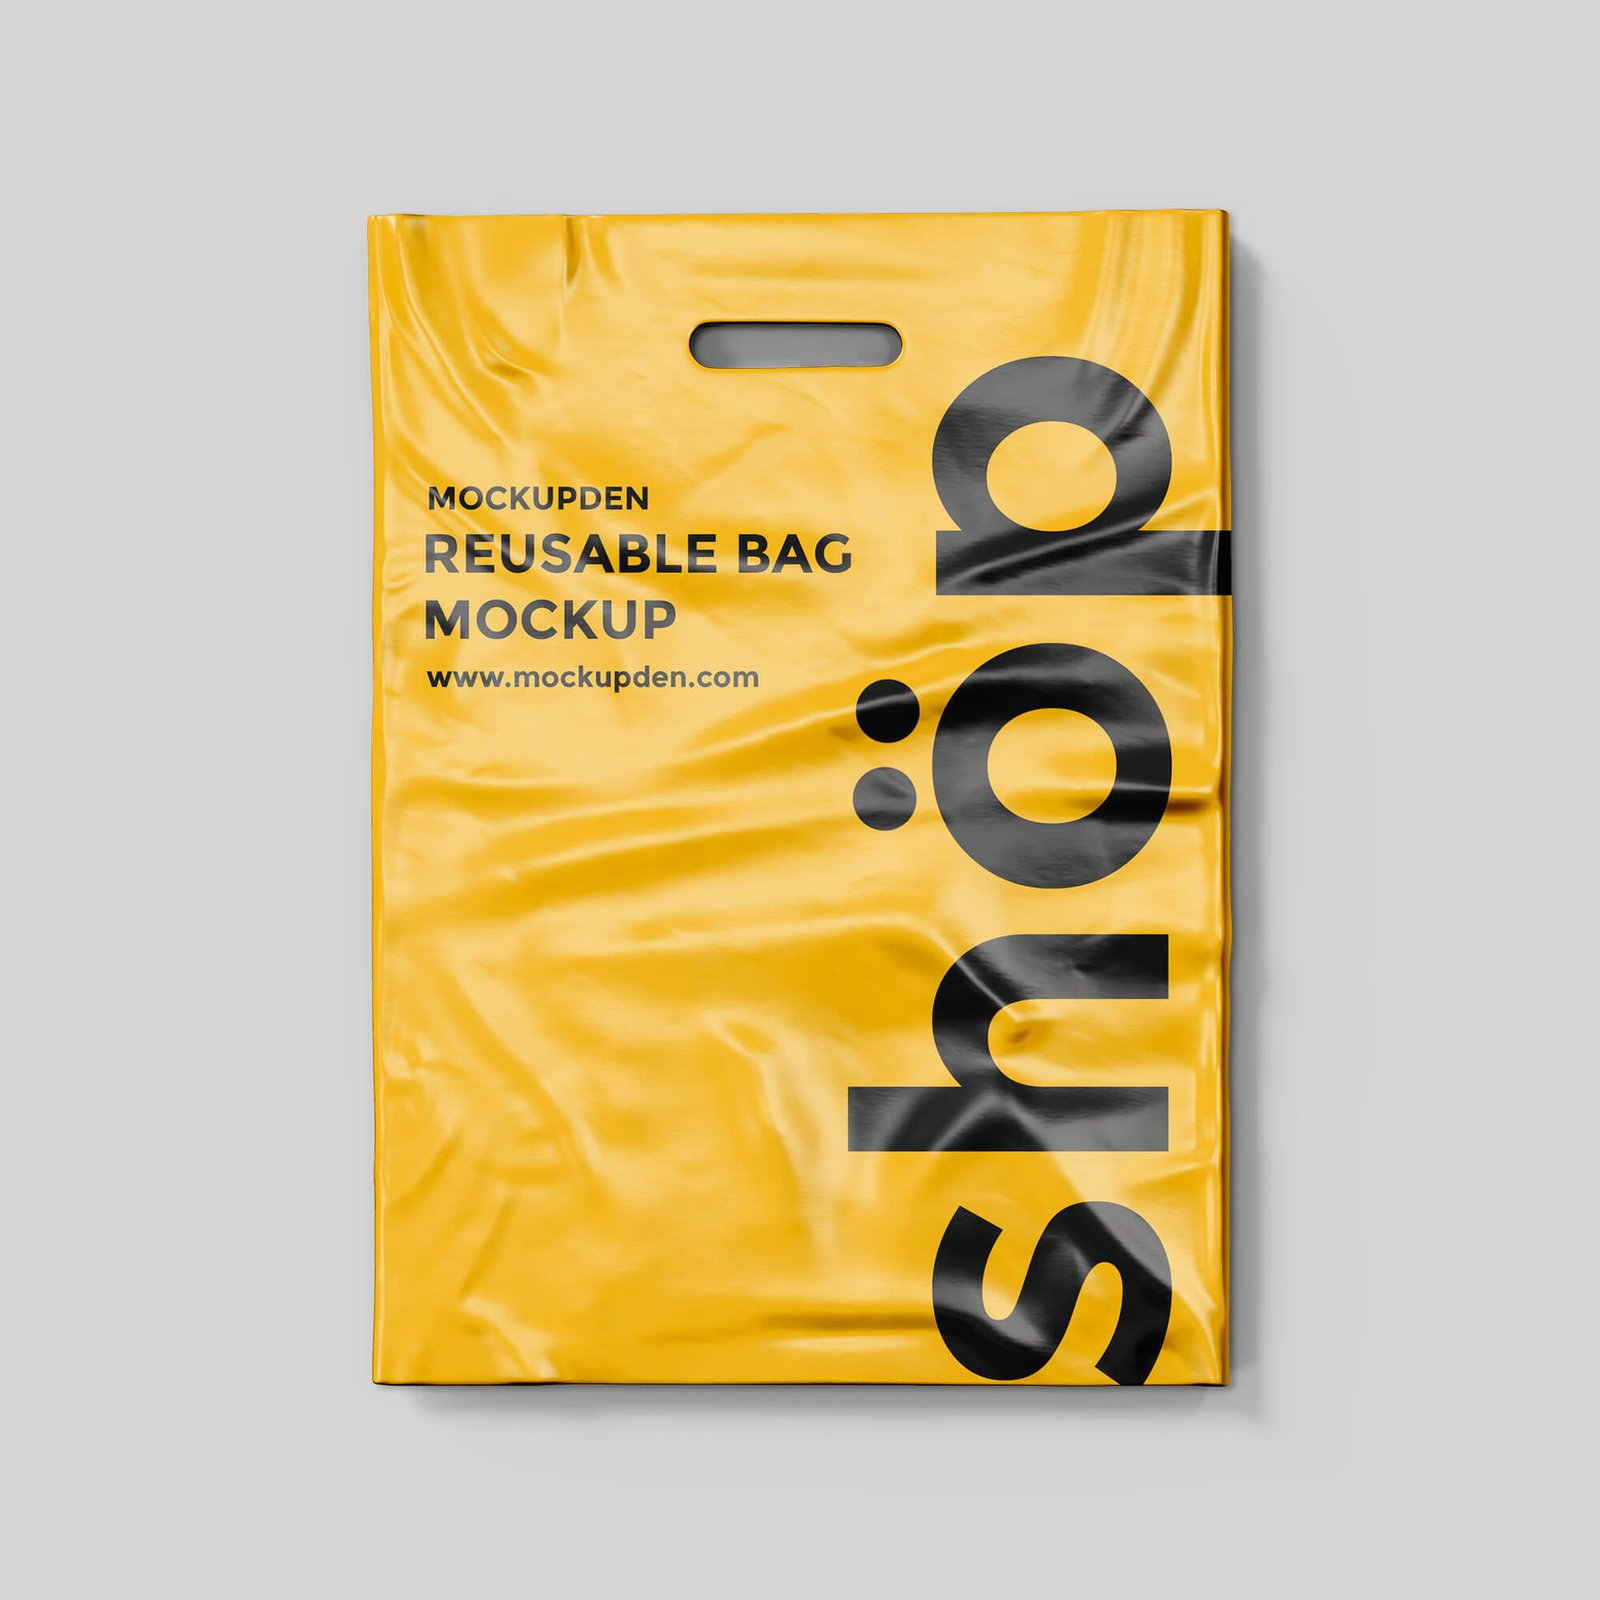 Design Free Reusable Bag Mockup PSD Template